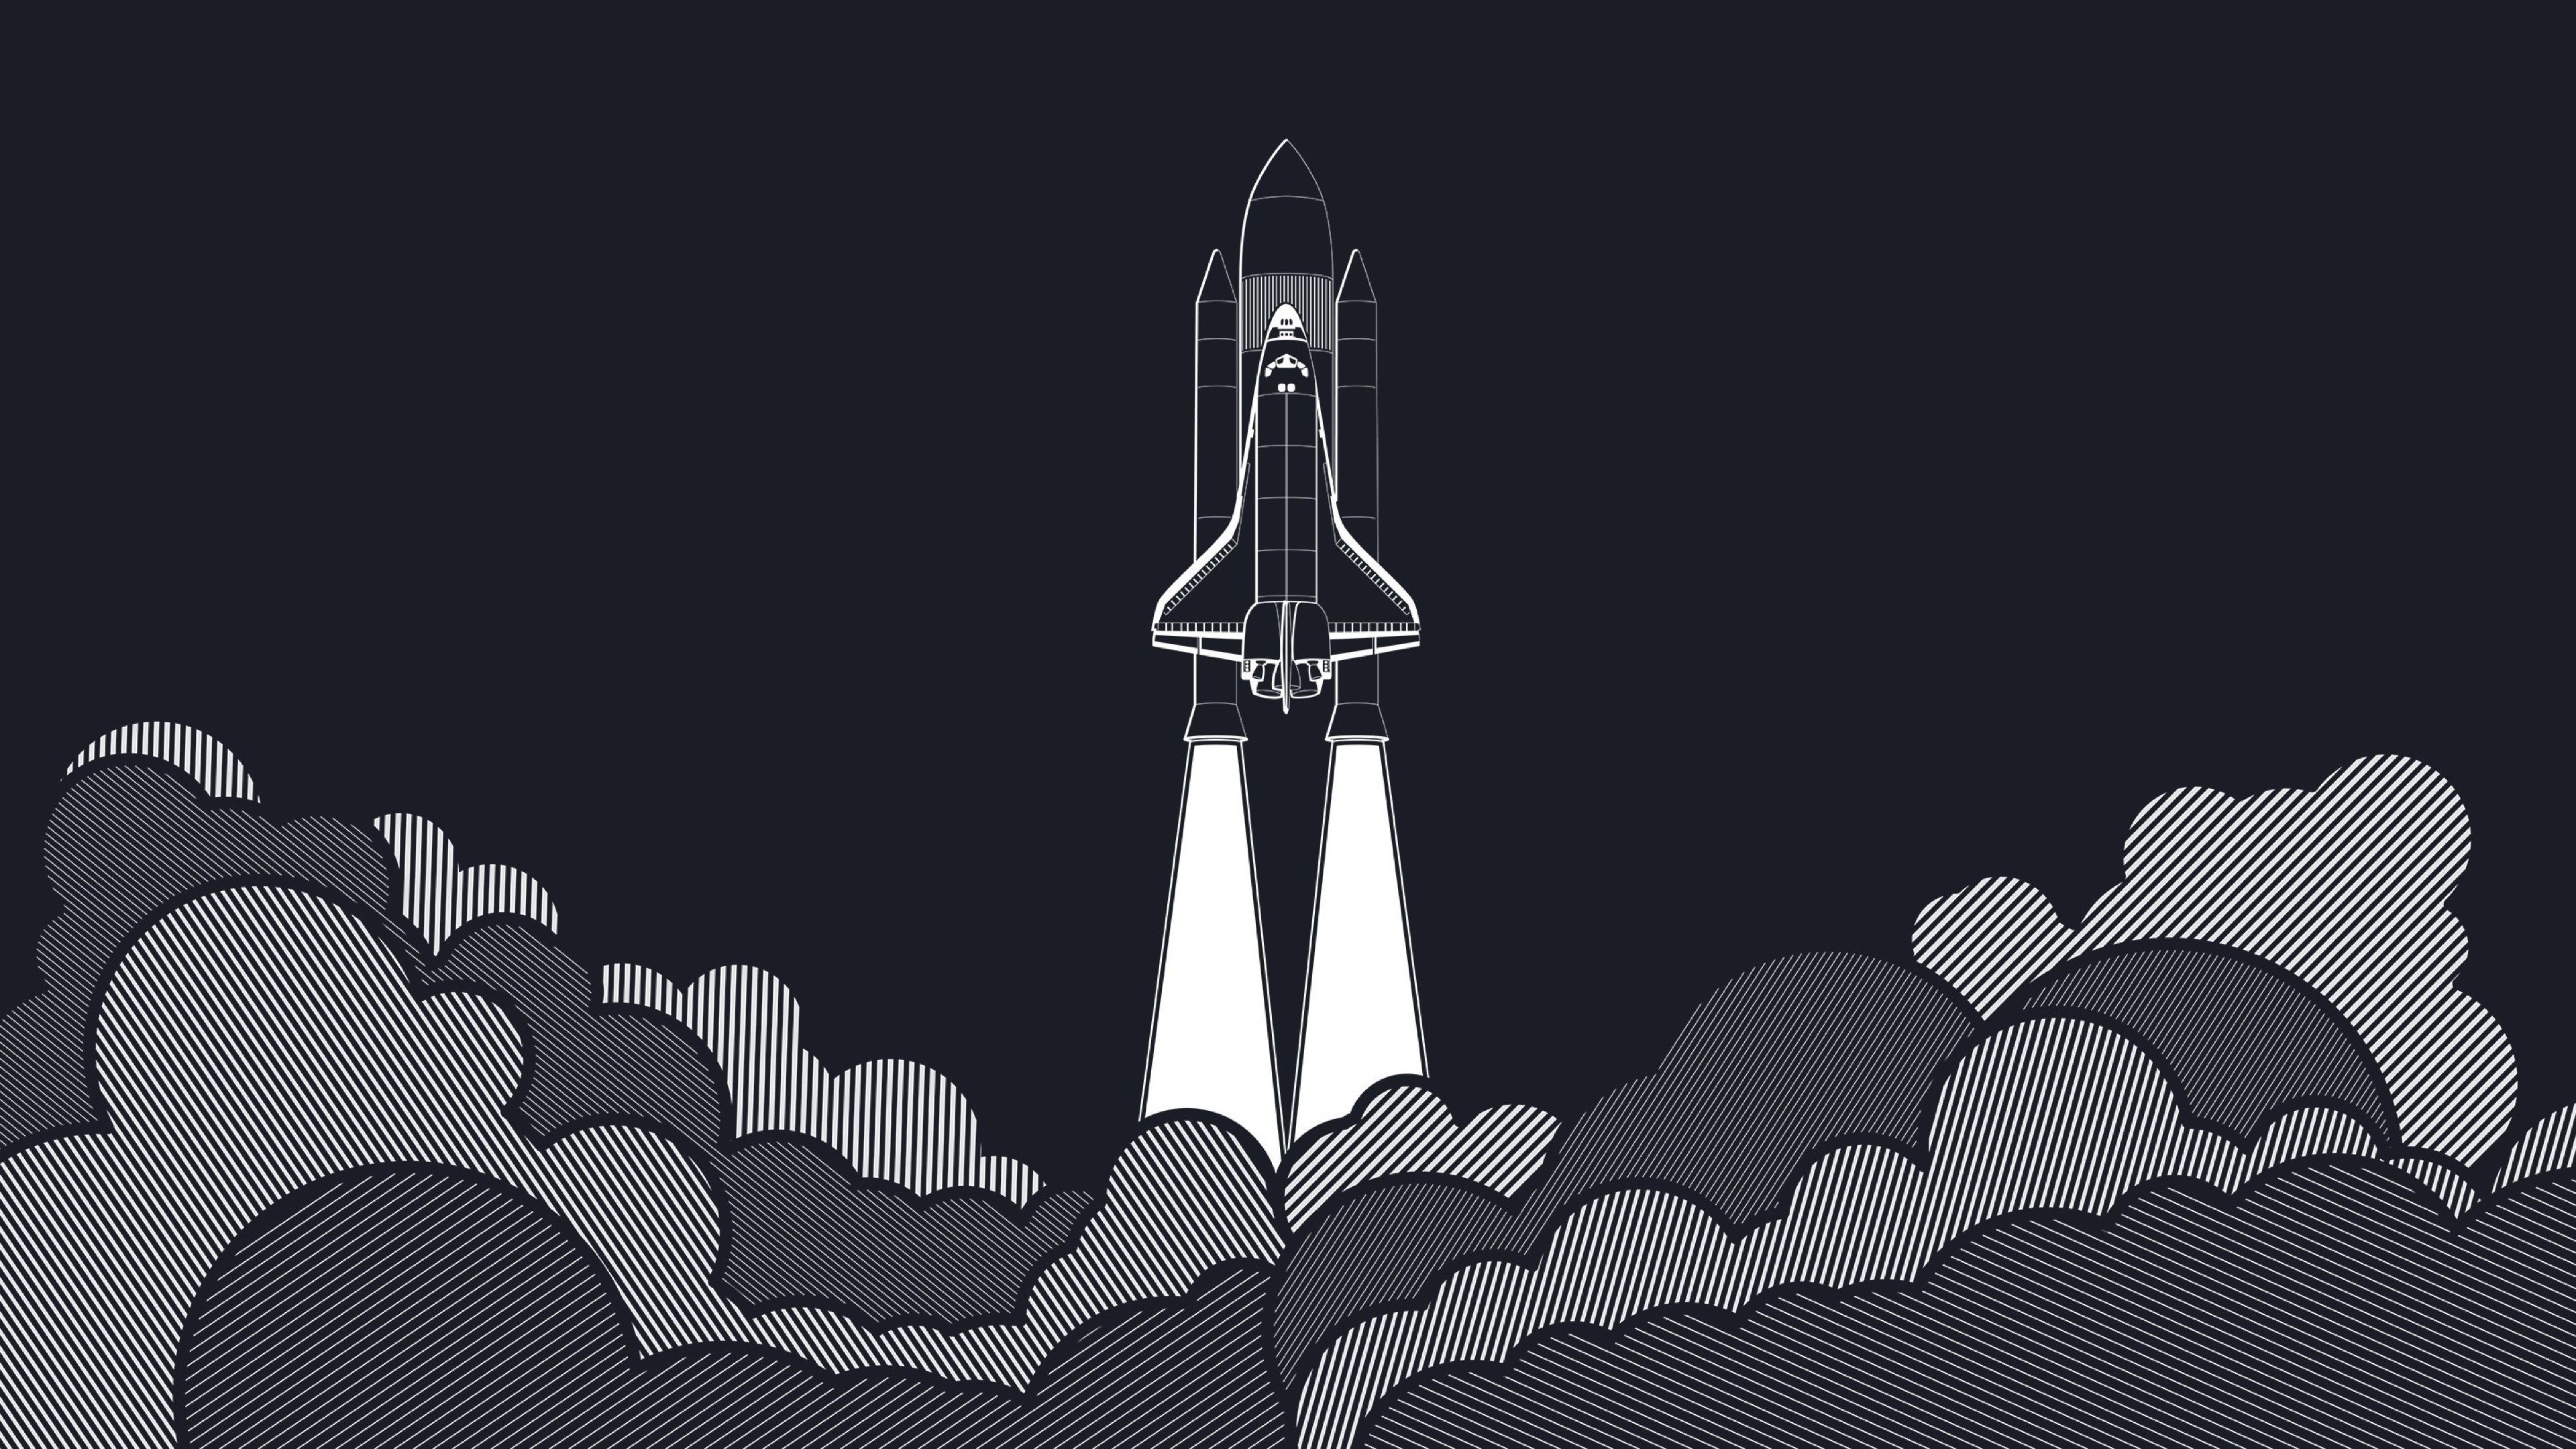 Space Shuttle Rocket Startup Concepts Minimalism 4K Wallpaper, HD Minimalist 4K Wallpaper, Image, Photo and Background